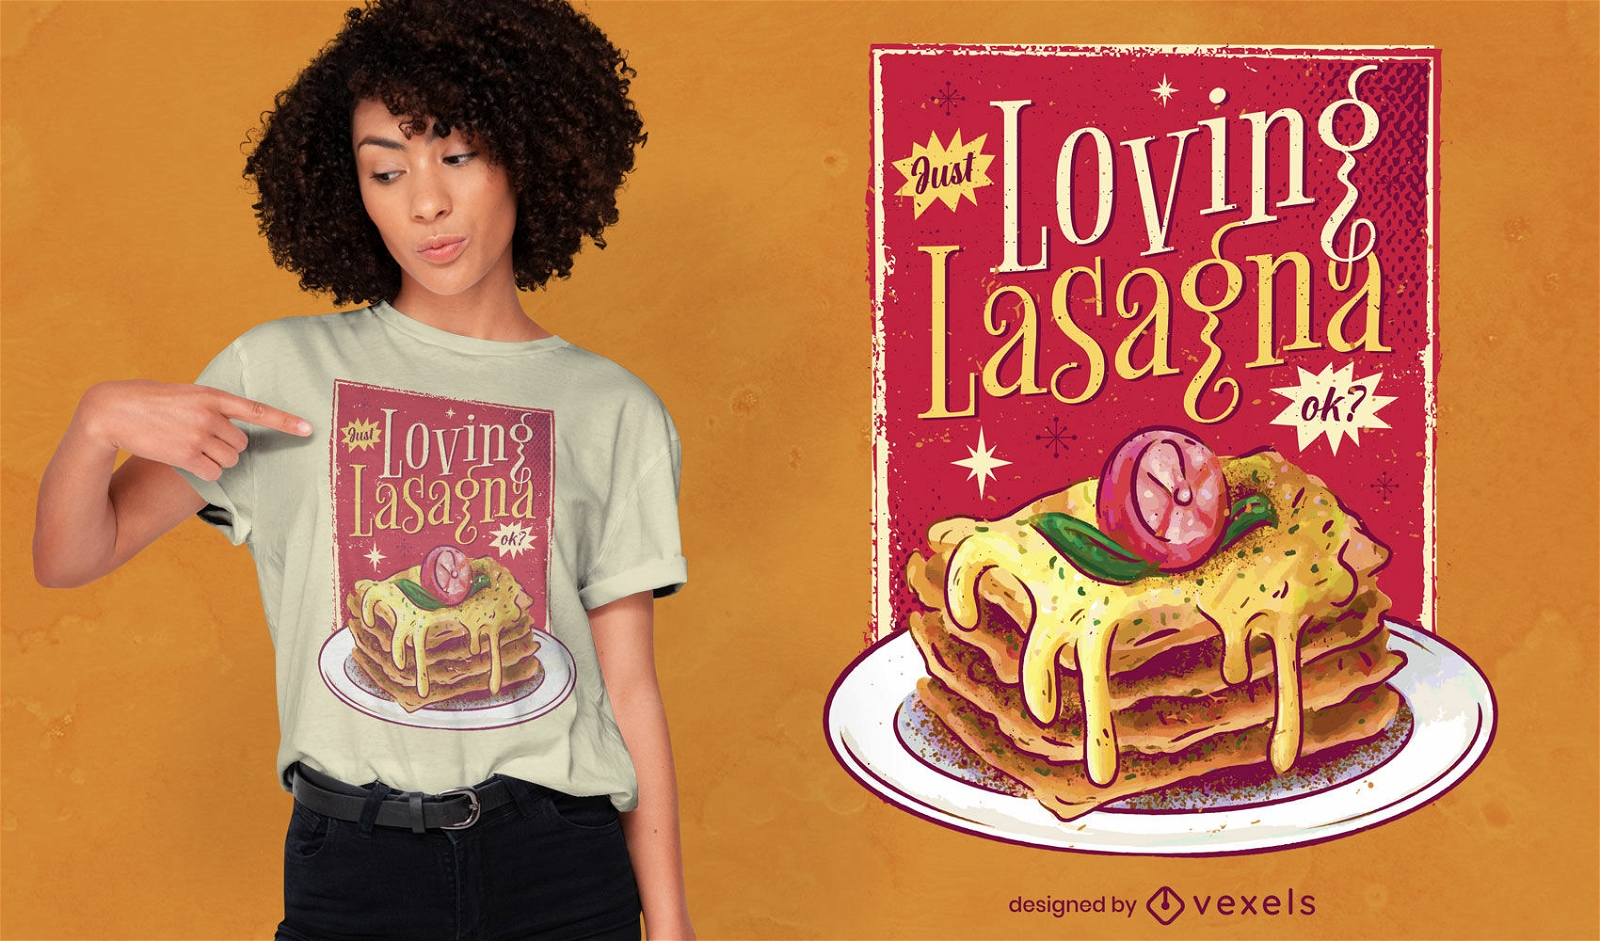 Just loving lasagna t-shirt design